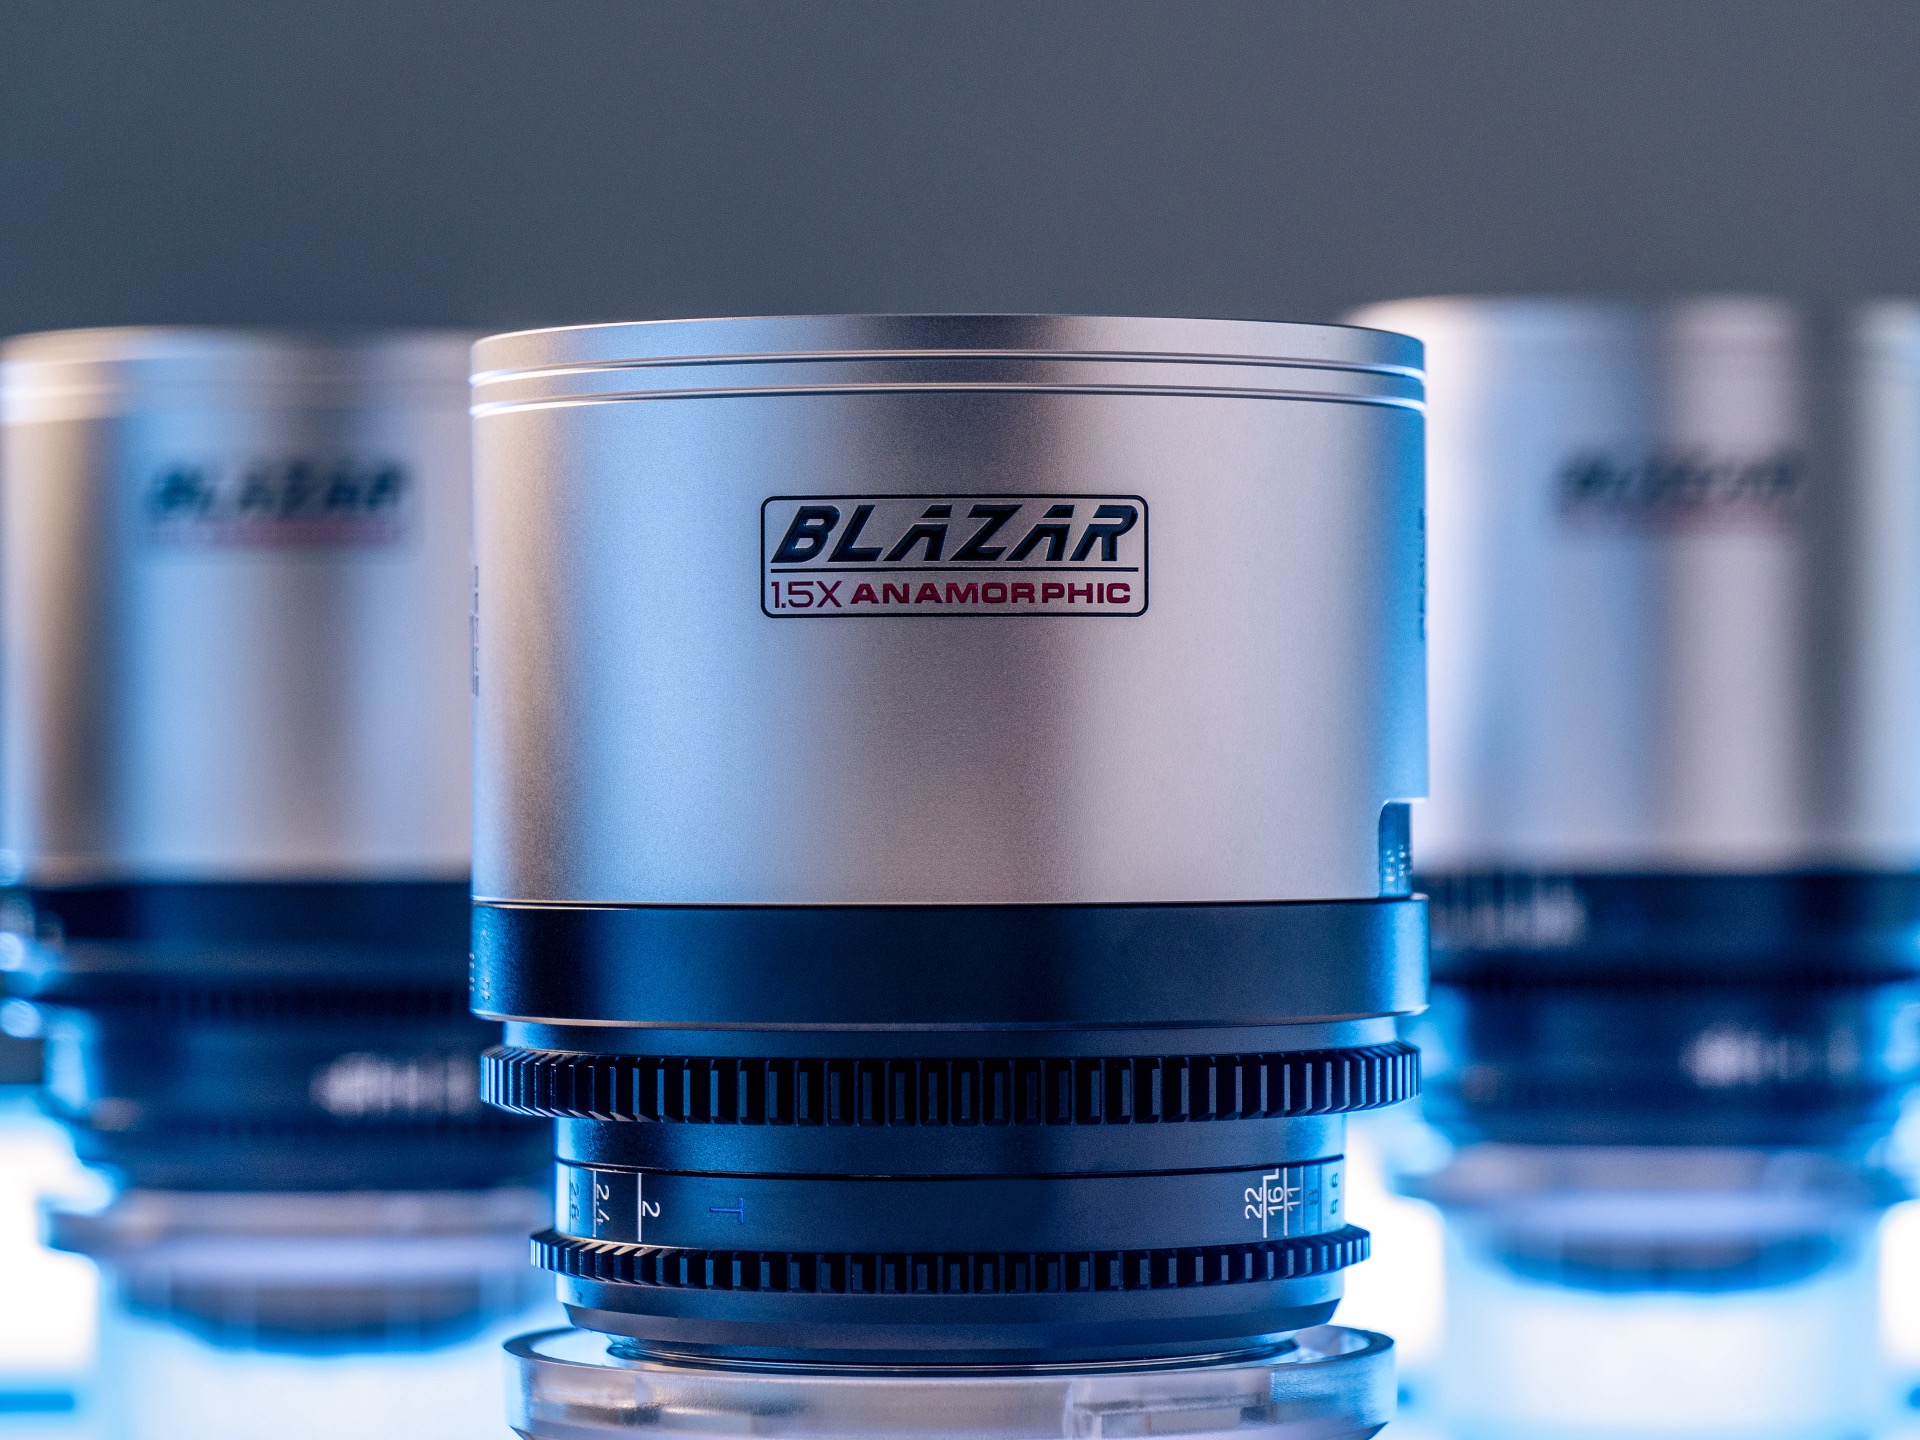 Review: Blazar Remus 1.5x anamorphic lenses 14